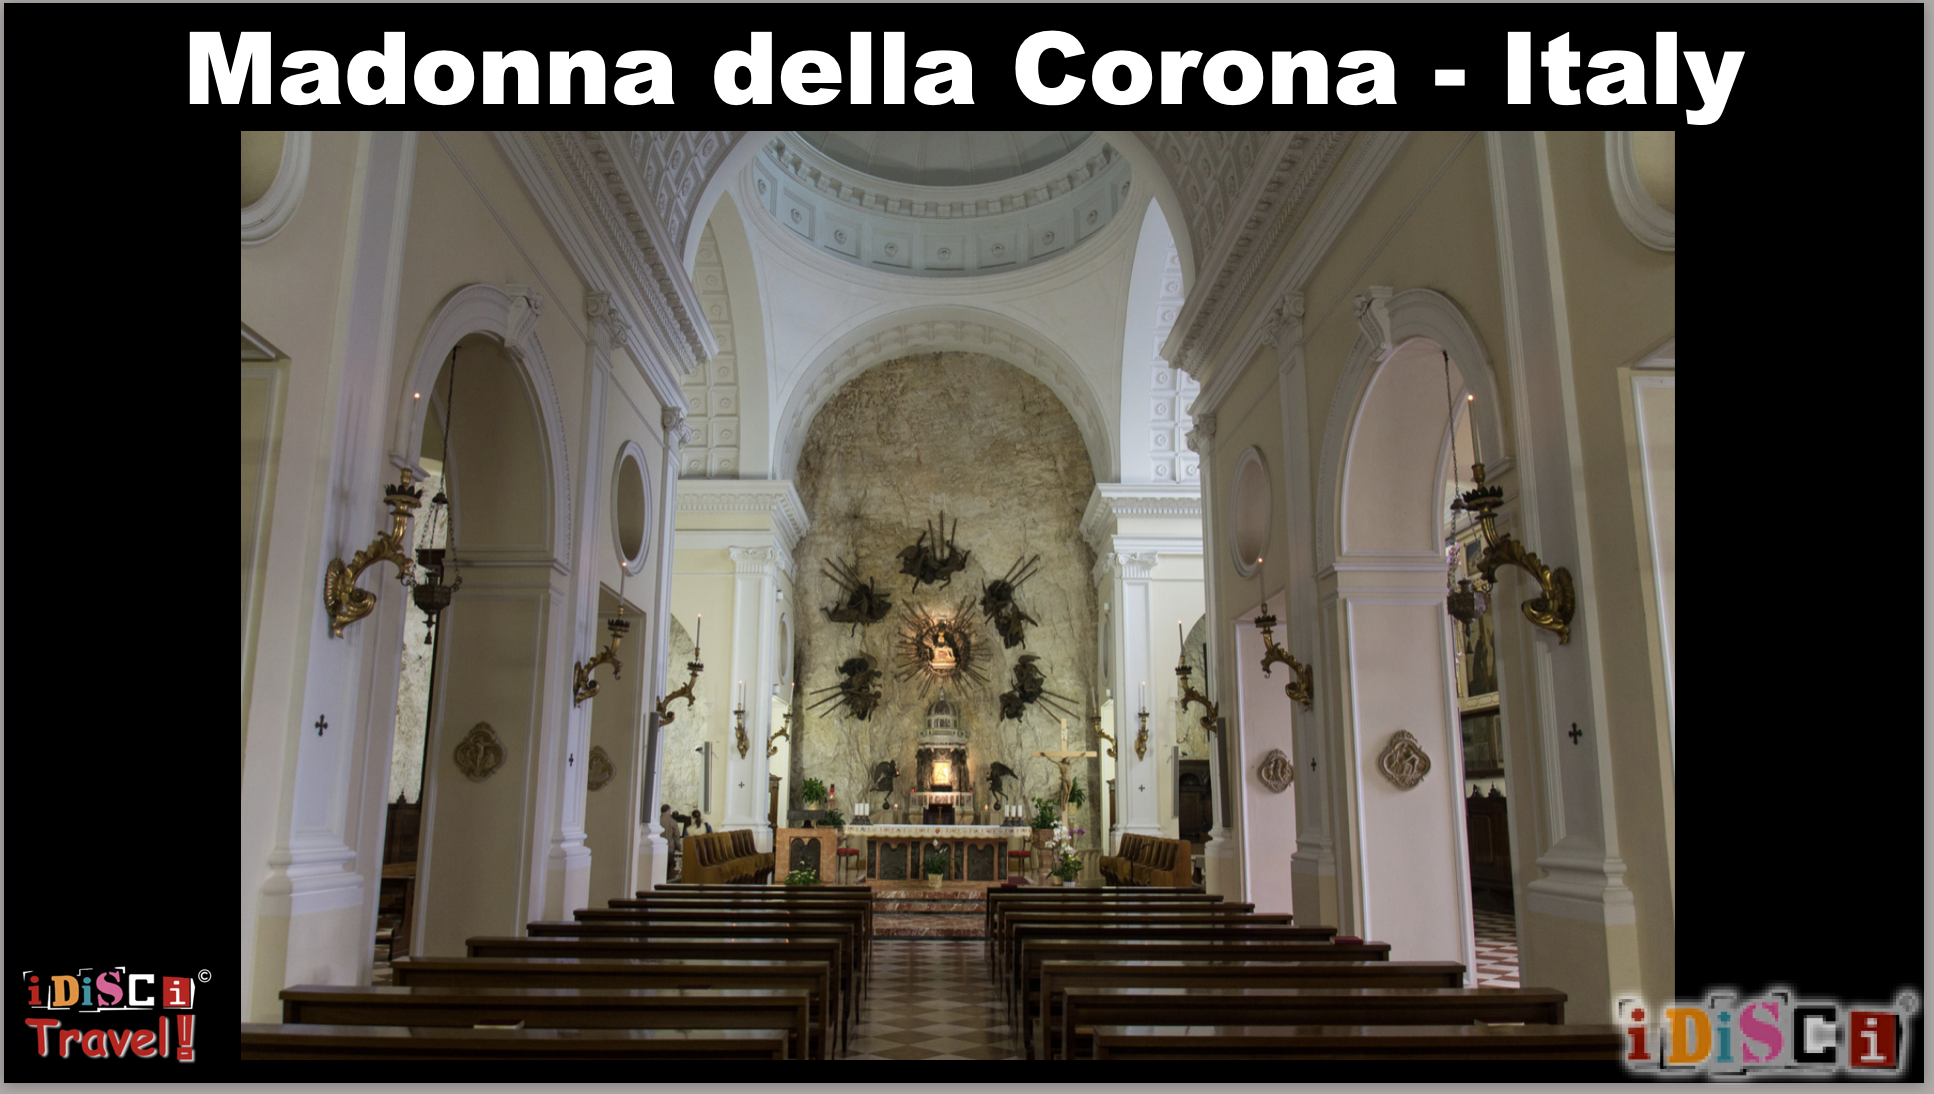 Madonna della Corona, Lake Garda, Northern Italy, SS249, 16th century, Middle Ages, Renaissance, Renaissance Art, Renaissance Architecture, Baroque Architecture, European Renaissance,